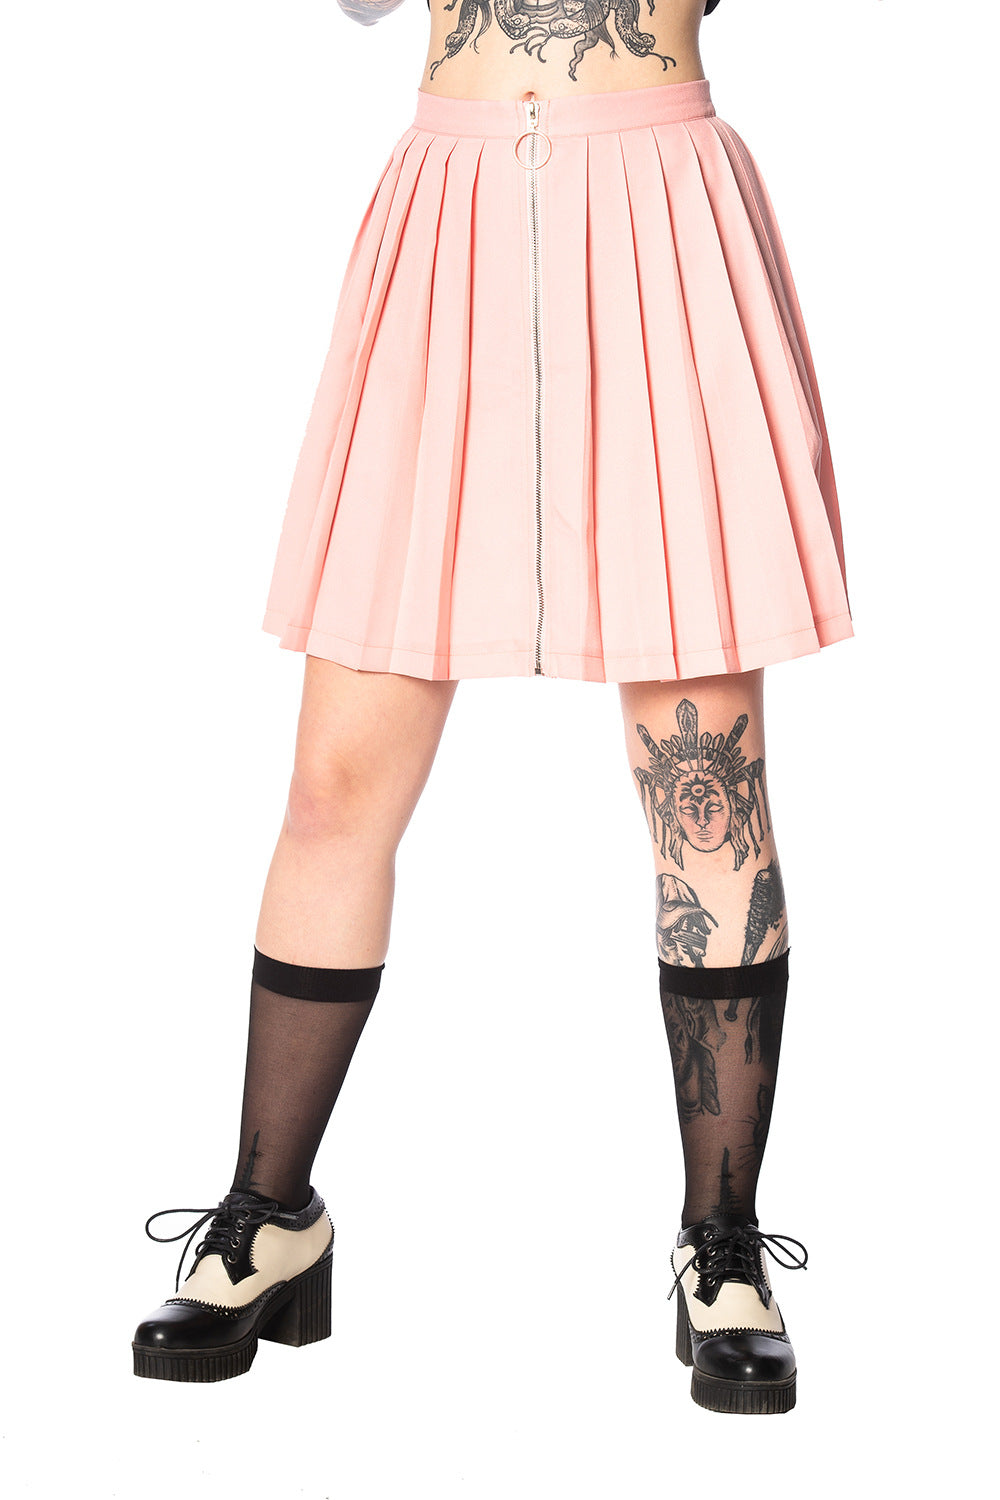 Banned Alternative Urban Vamp Pleats Skirt